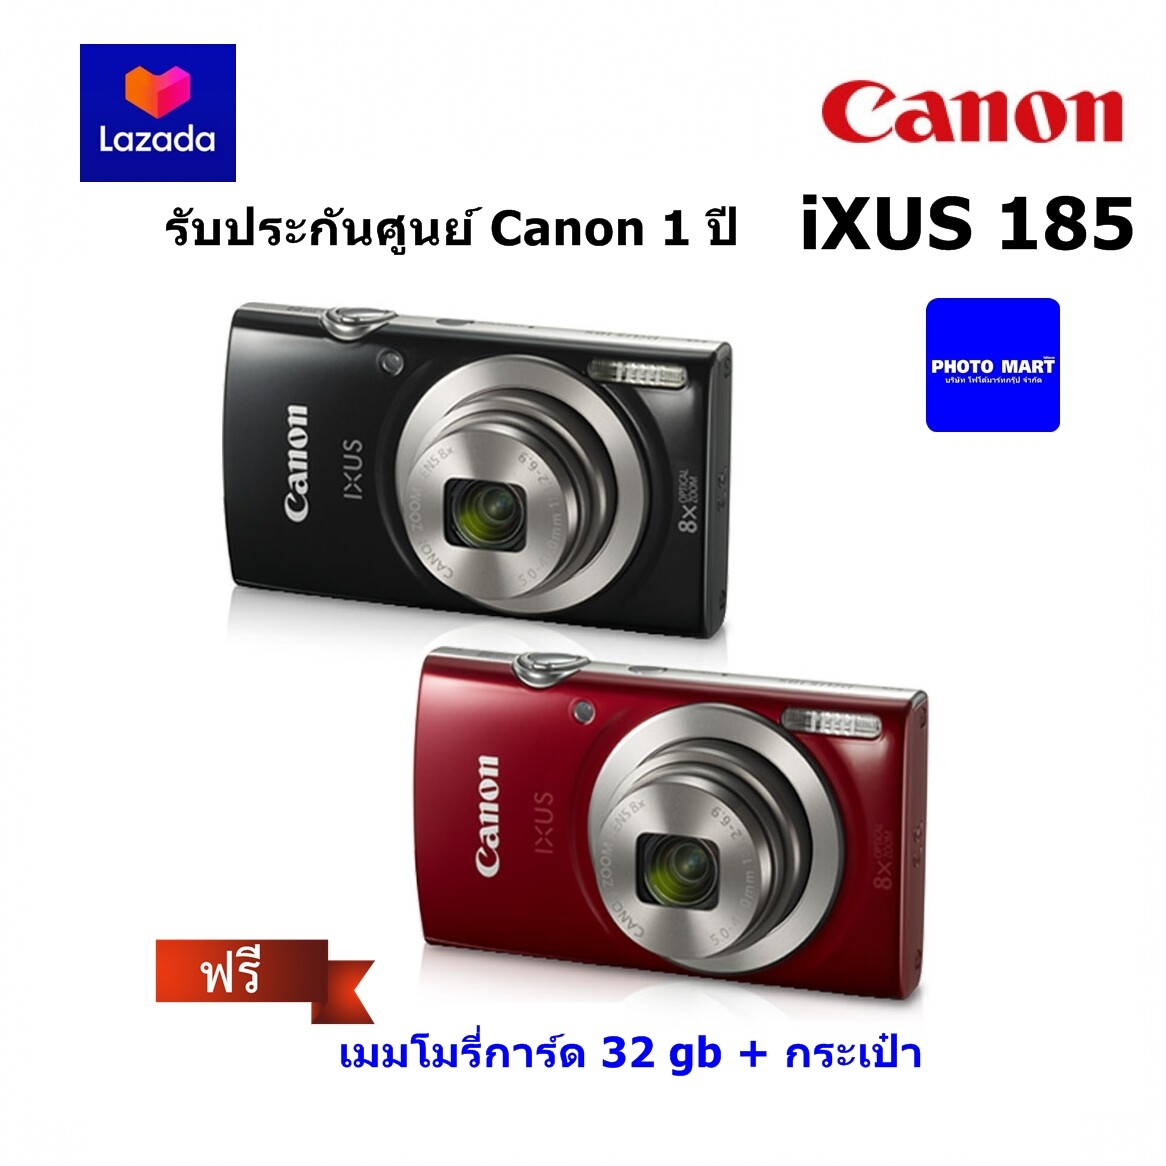 Canon Ixus 185 ประกันศูนย์Canon1ปี แถมฟรี เมมโมรี่การ์ด 32GB+กระเป๋า